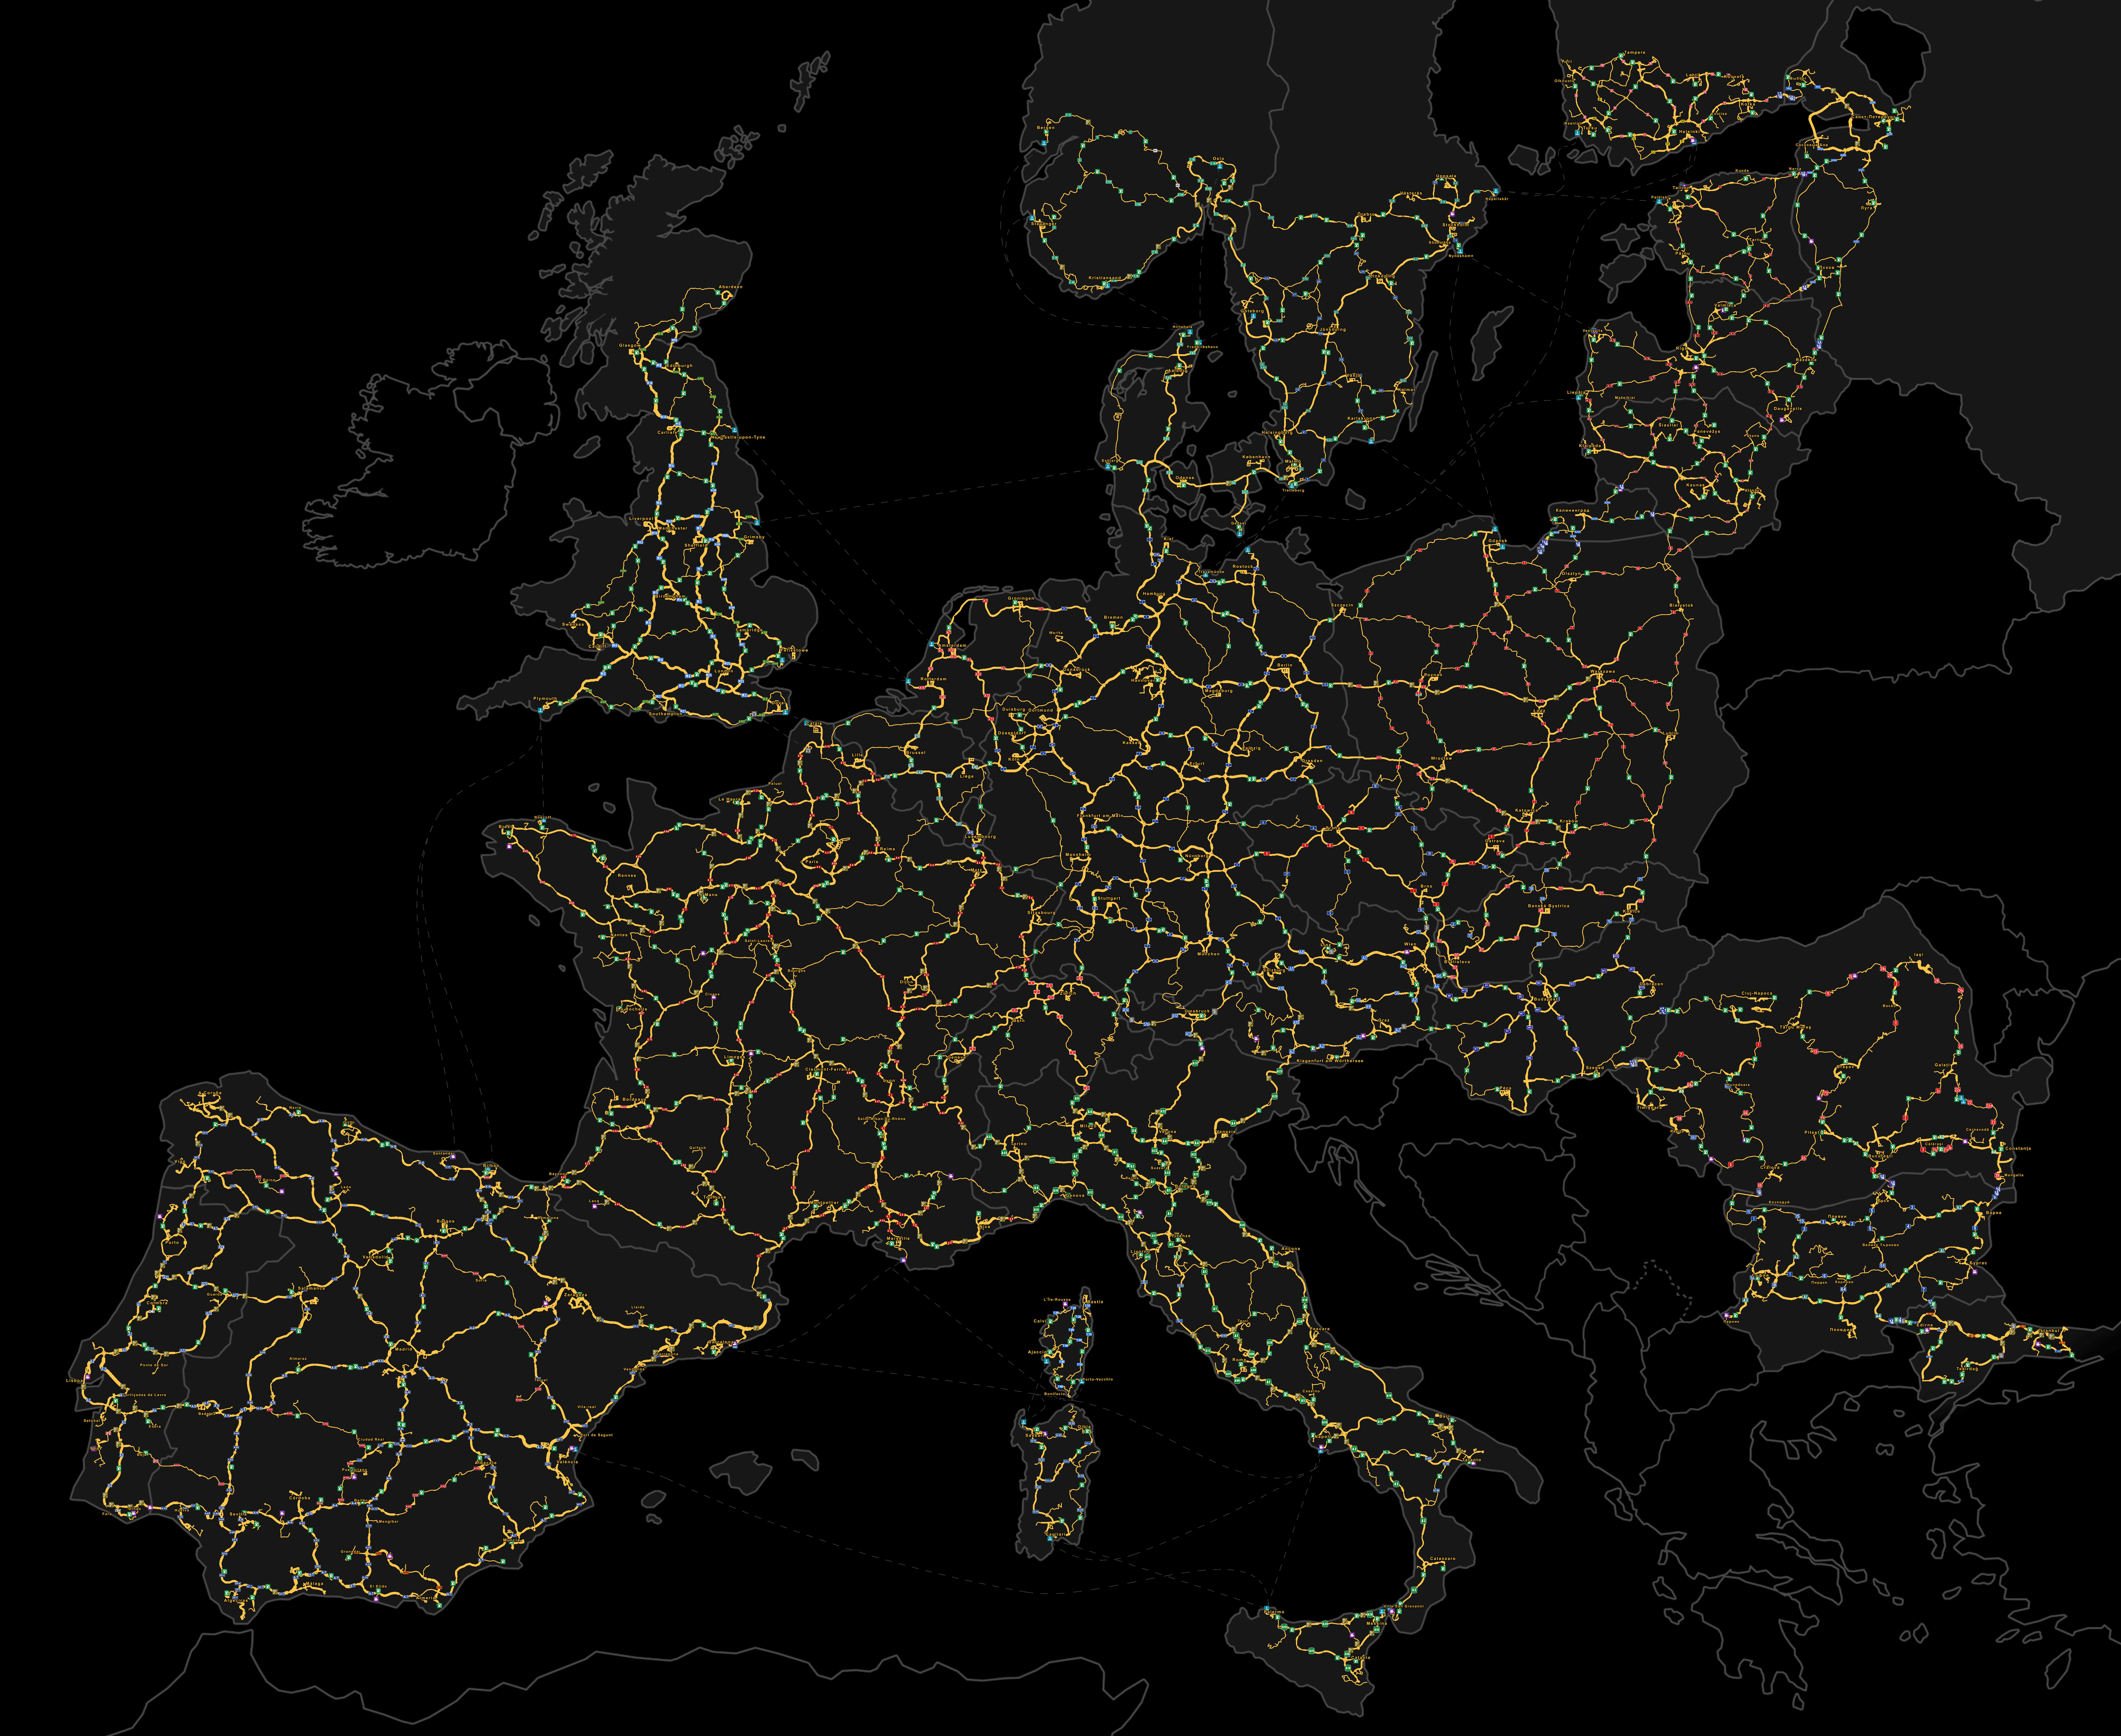 Euro Truck Simulator 2 Full Map Image - Euro Truck Simulator 2 full map.png | Truck Simulator Wiki | FANDOM powered by Wikia